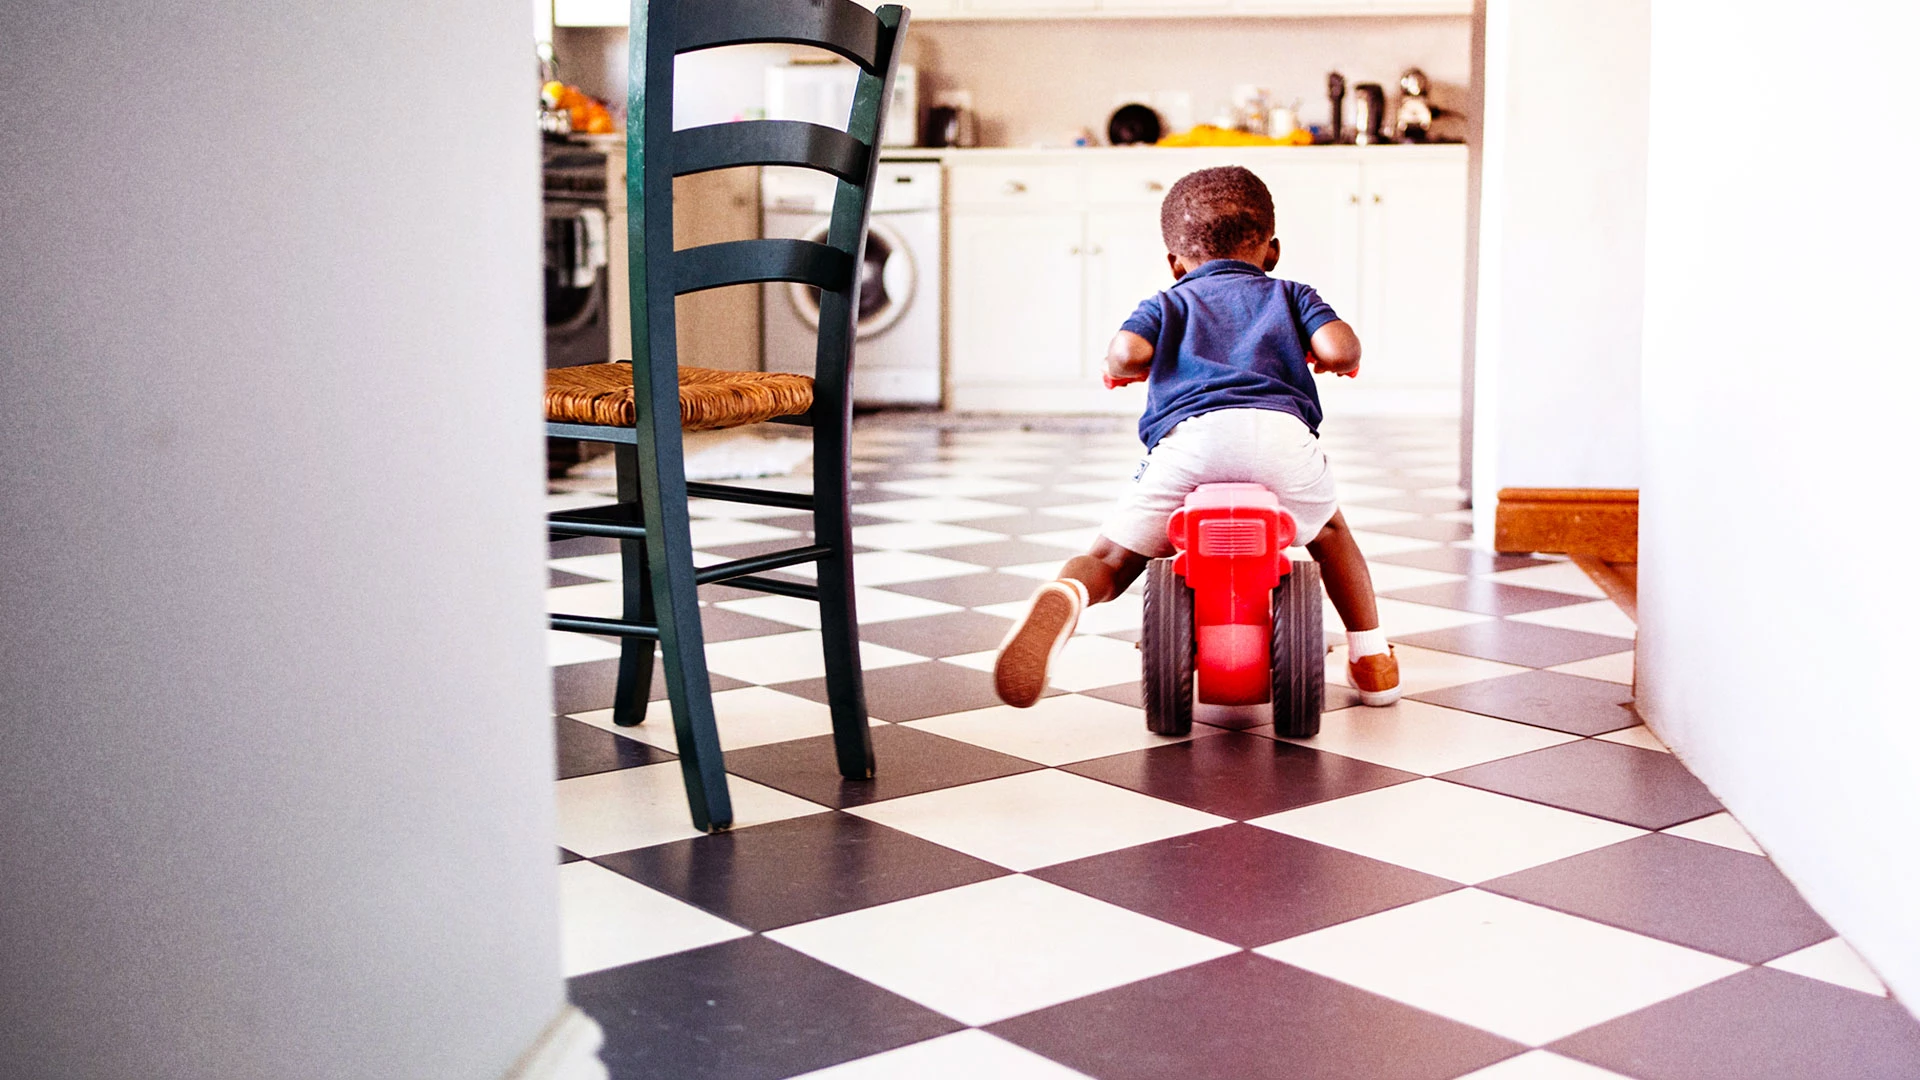 Boy child riding a bike in a kitchen  